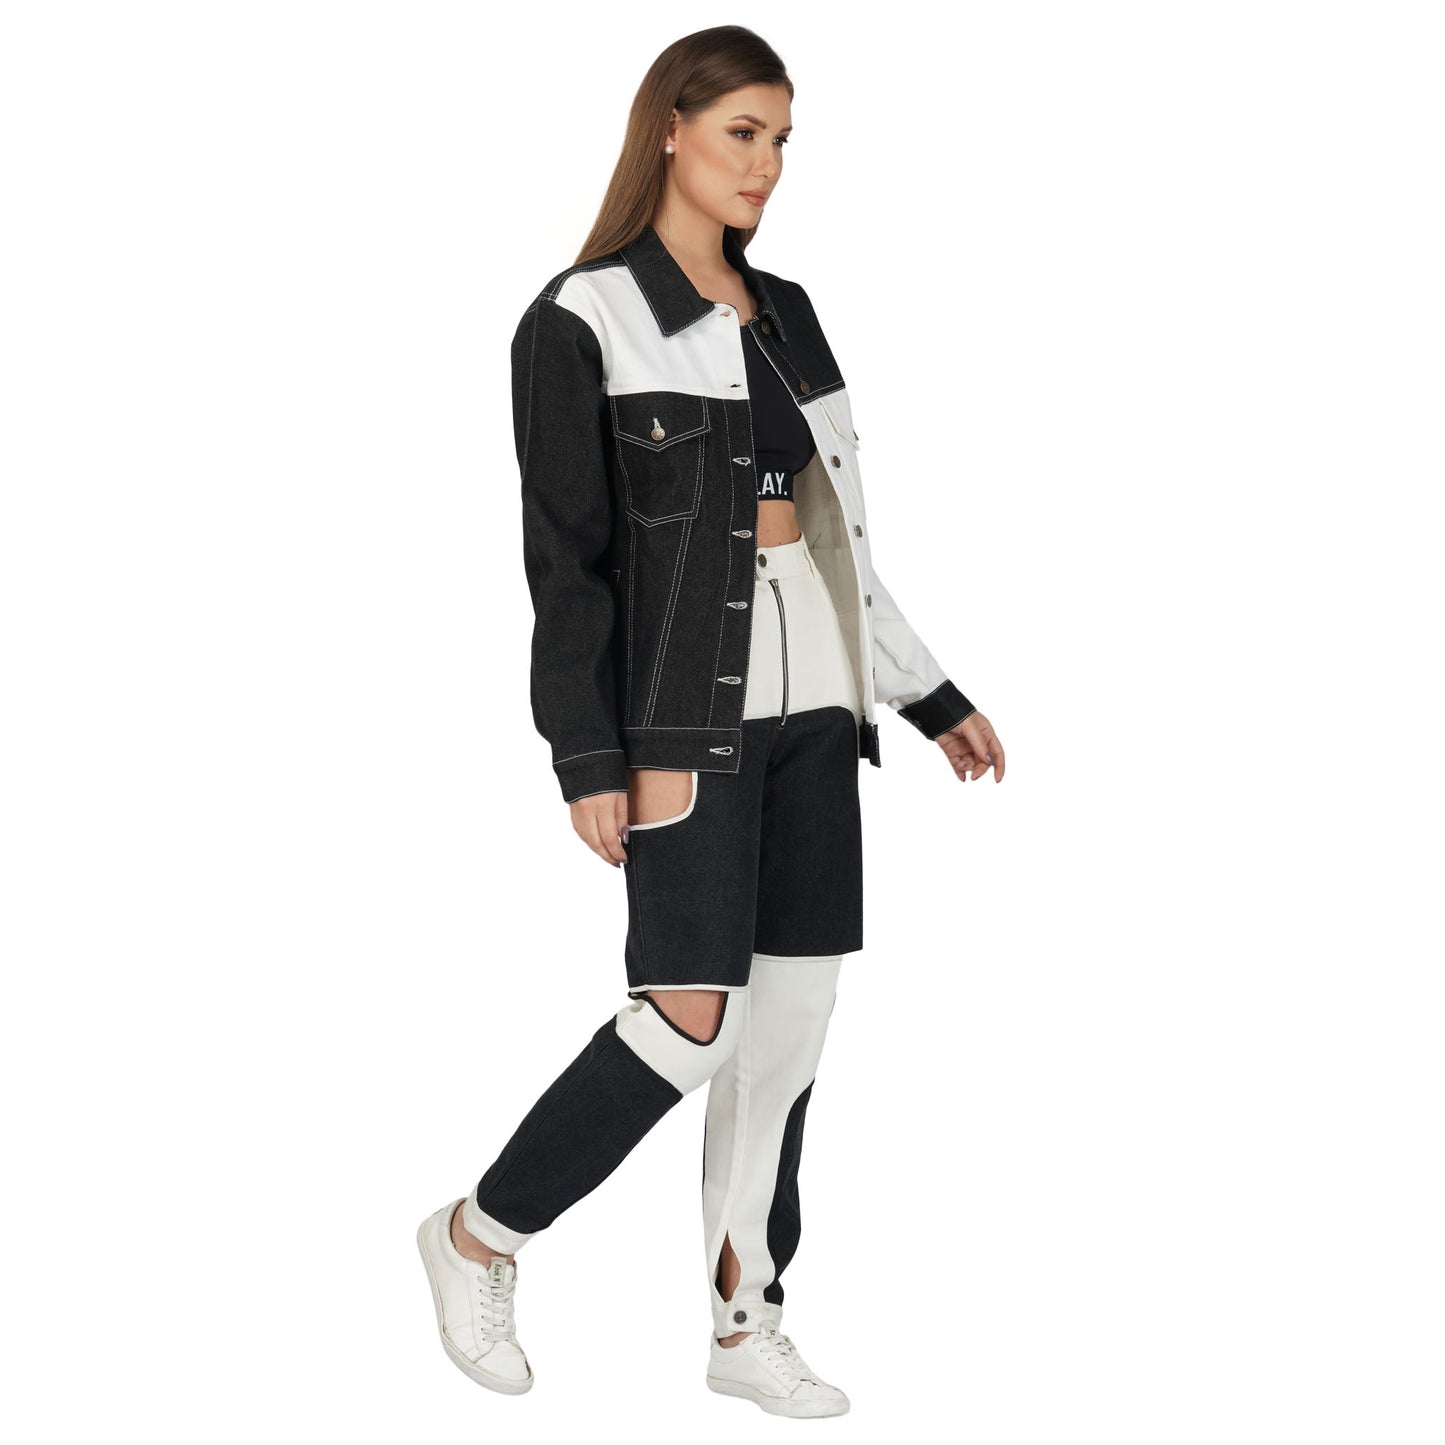 SLAY. Women's Black & White Colorblock Denim Jacket & Jeans Co-ord Set